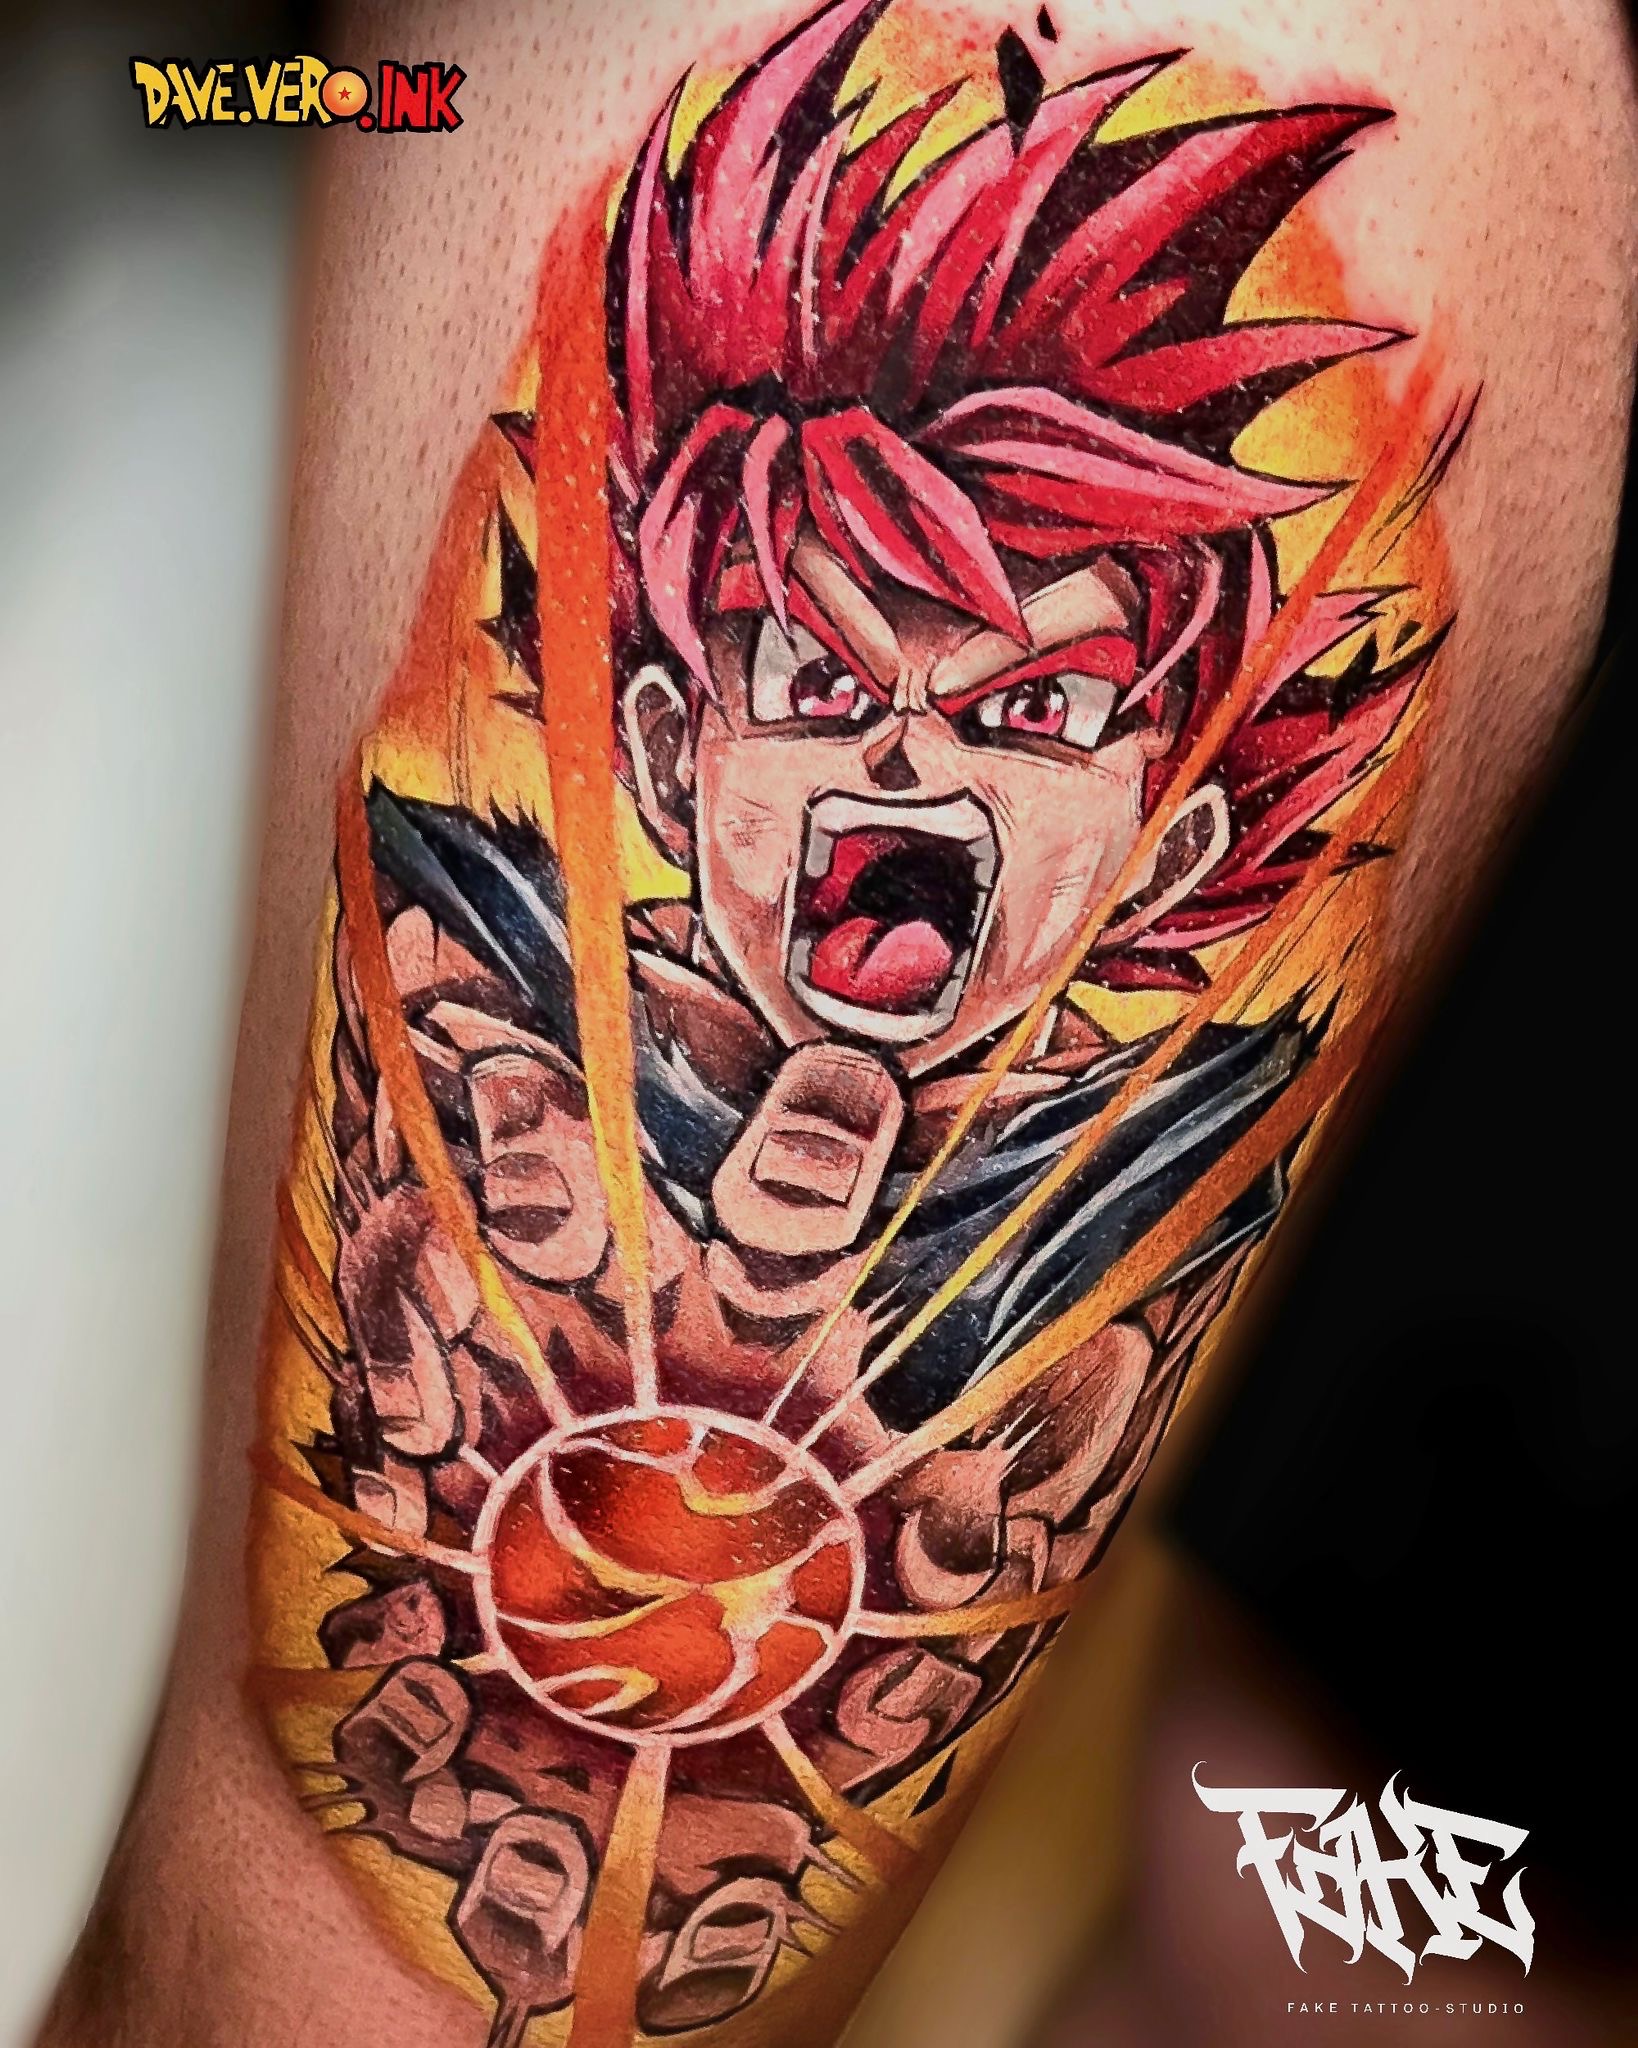 Anime tattoos - by DaveVeroInk by DaveVeroInk on DeviantArt